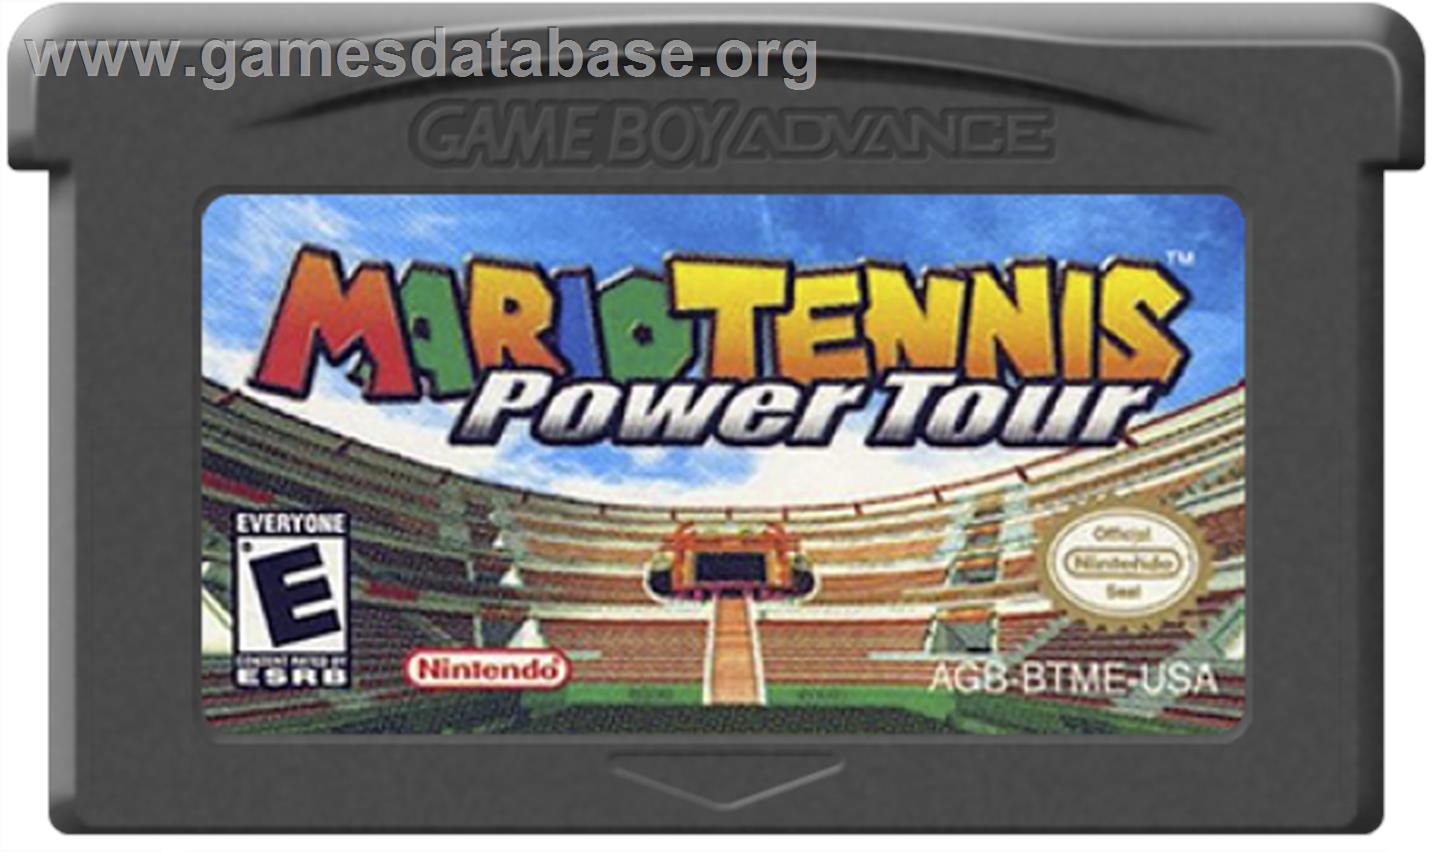 Mario Tennis: Power Tour - Nintendo Game Boy Advance - Artwork - Cartridge